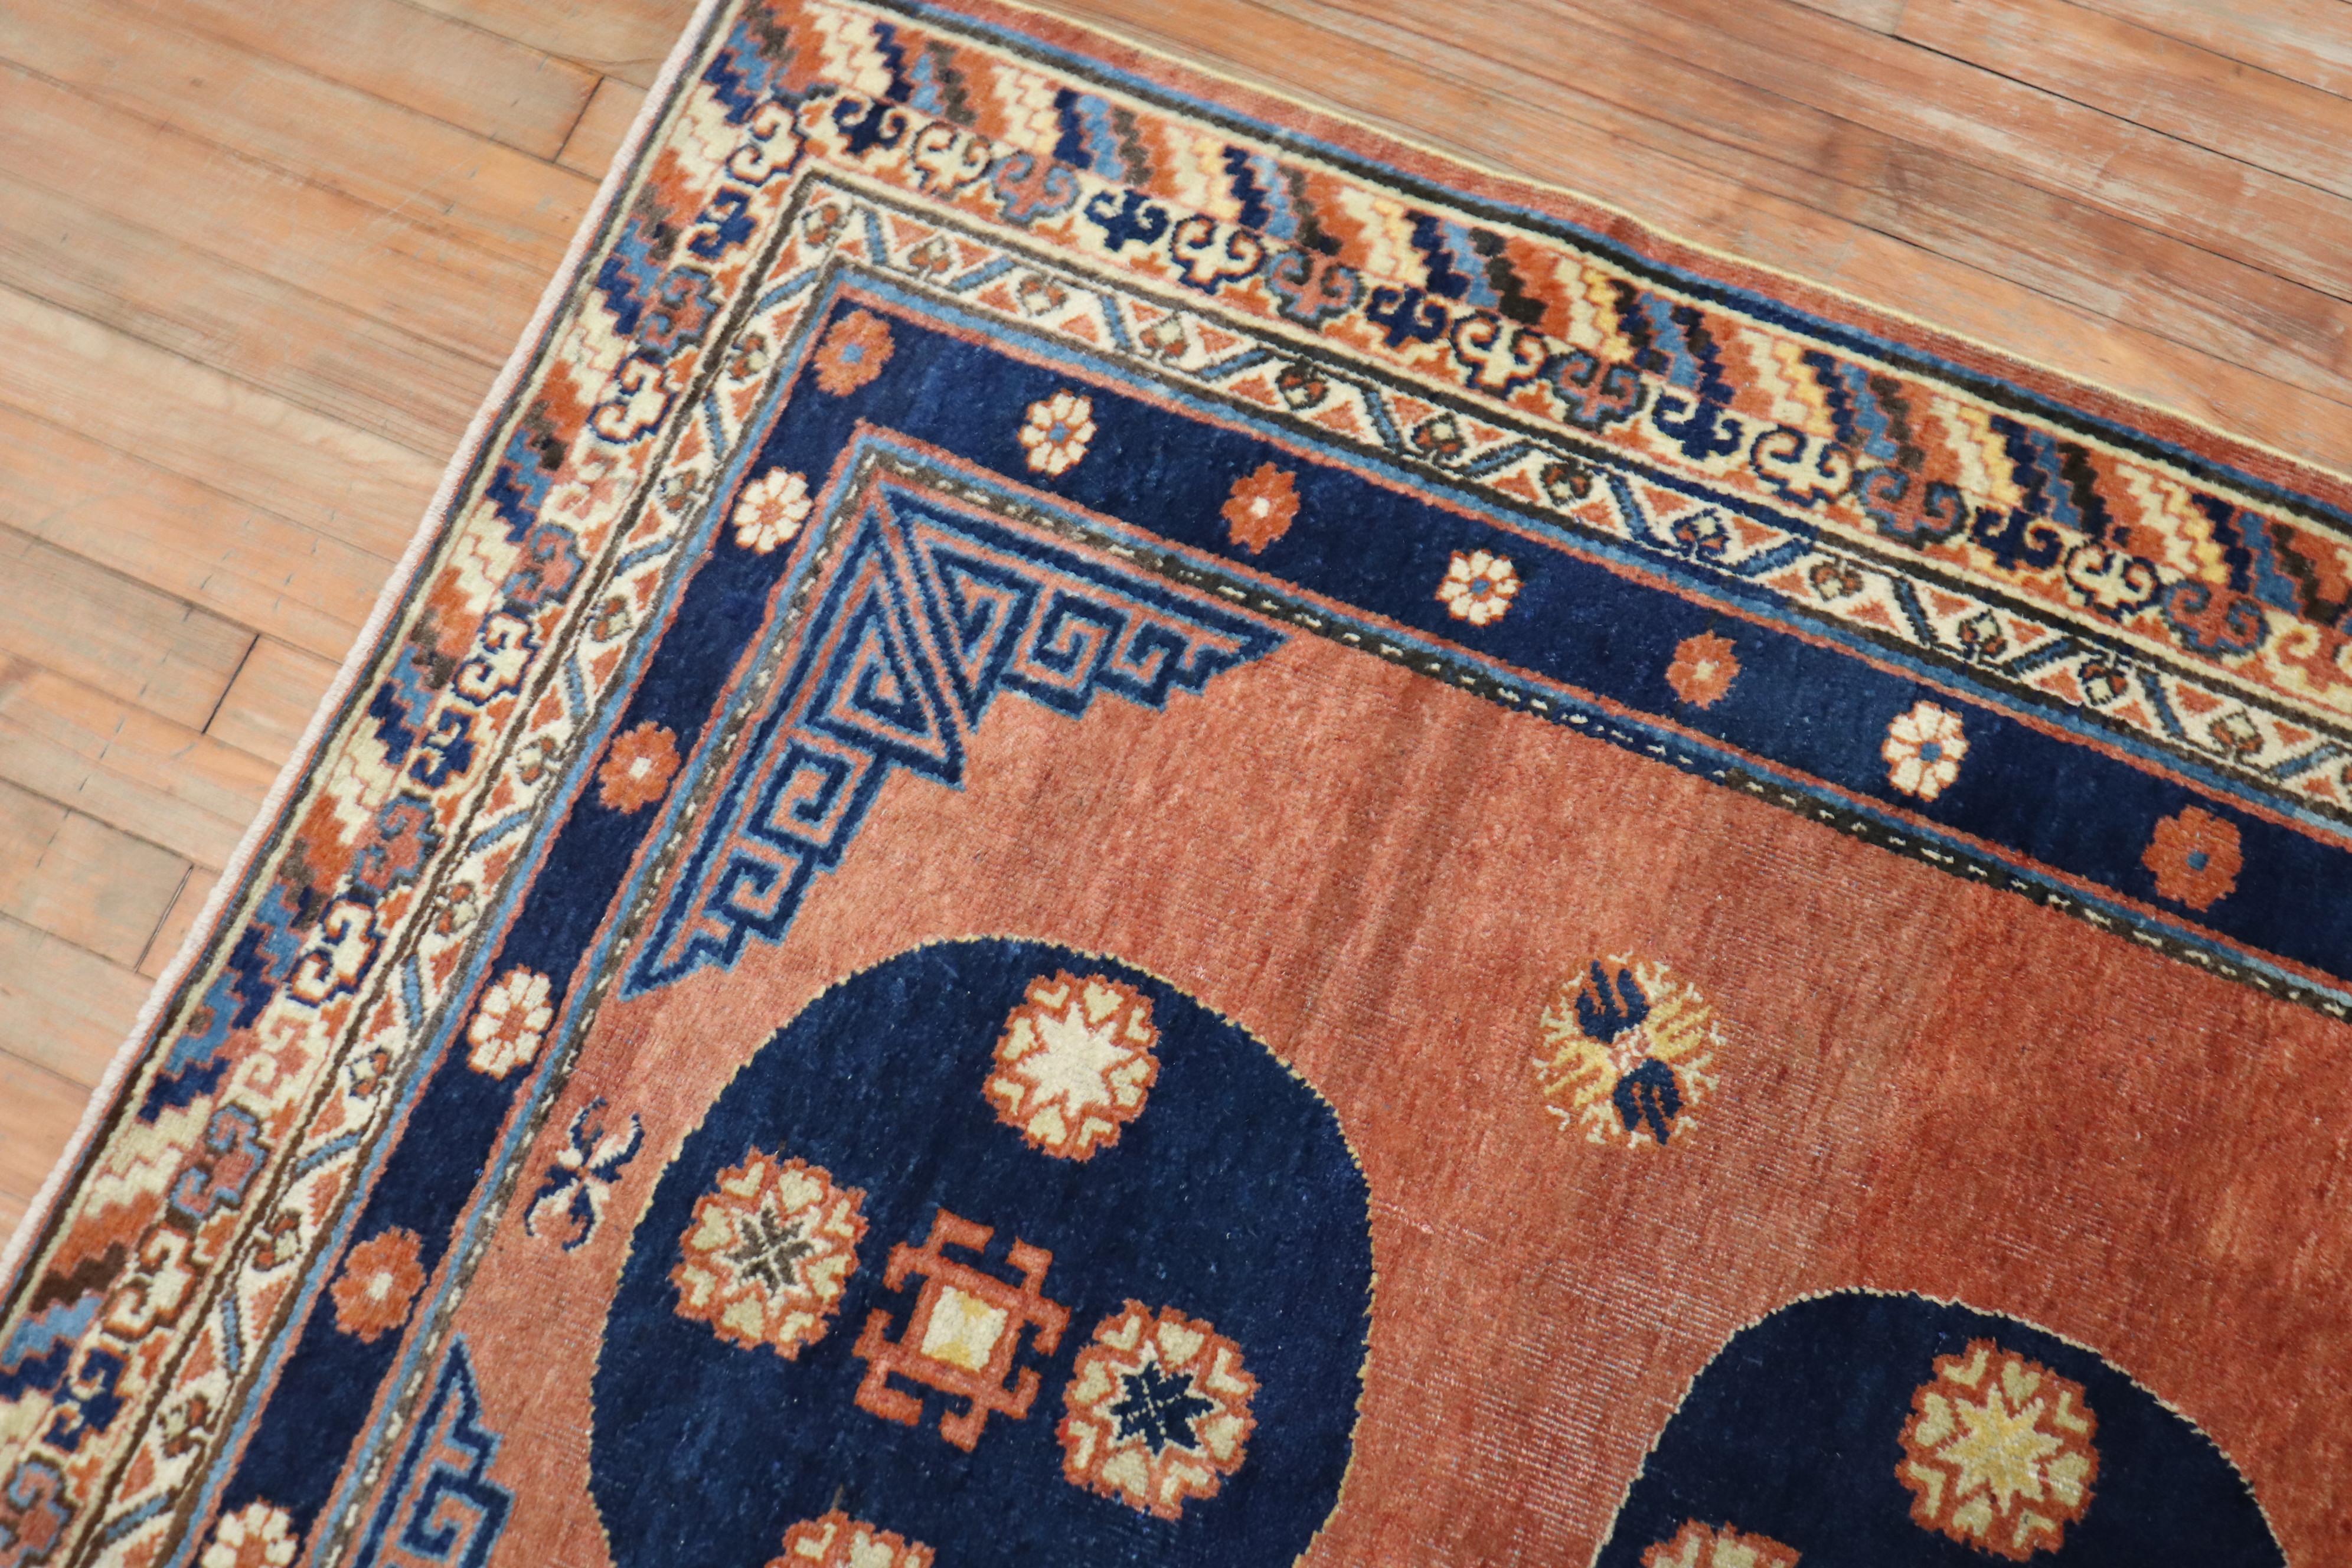 20th Century Rare Matching Pair of Antique Khotan Carpets For Sale